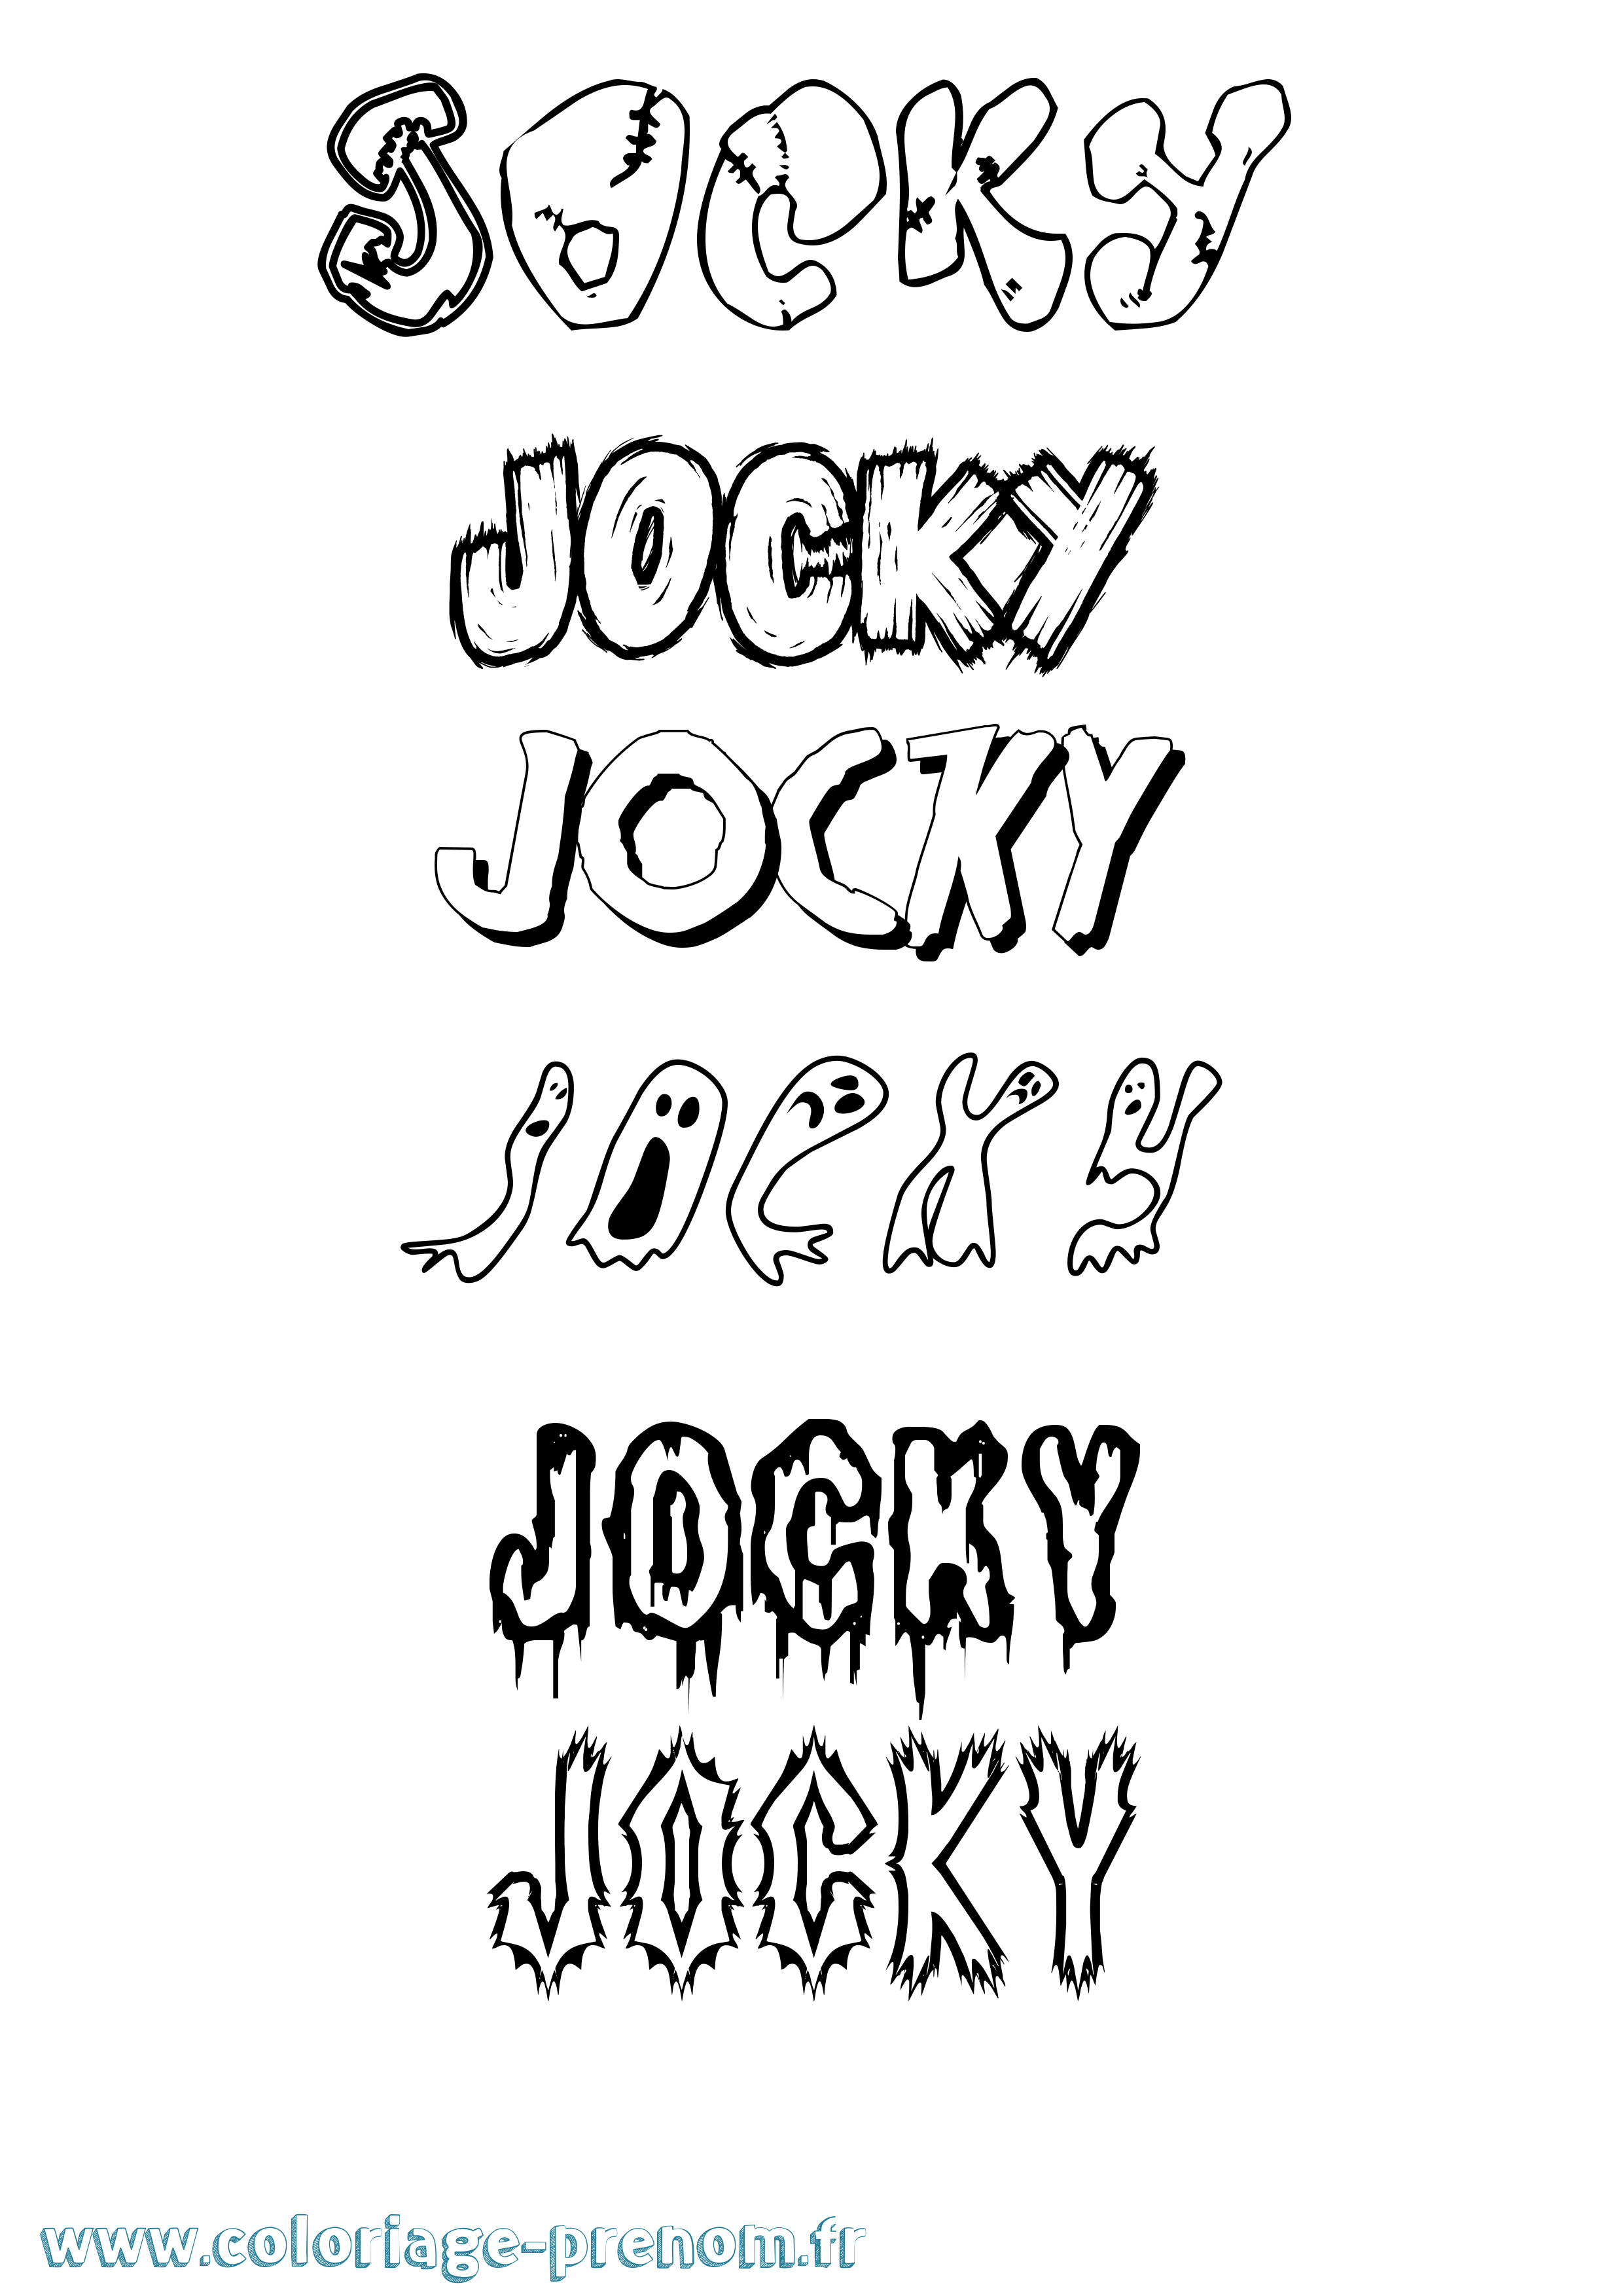 Coloriage prénom Jocky Frisson